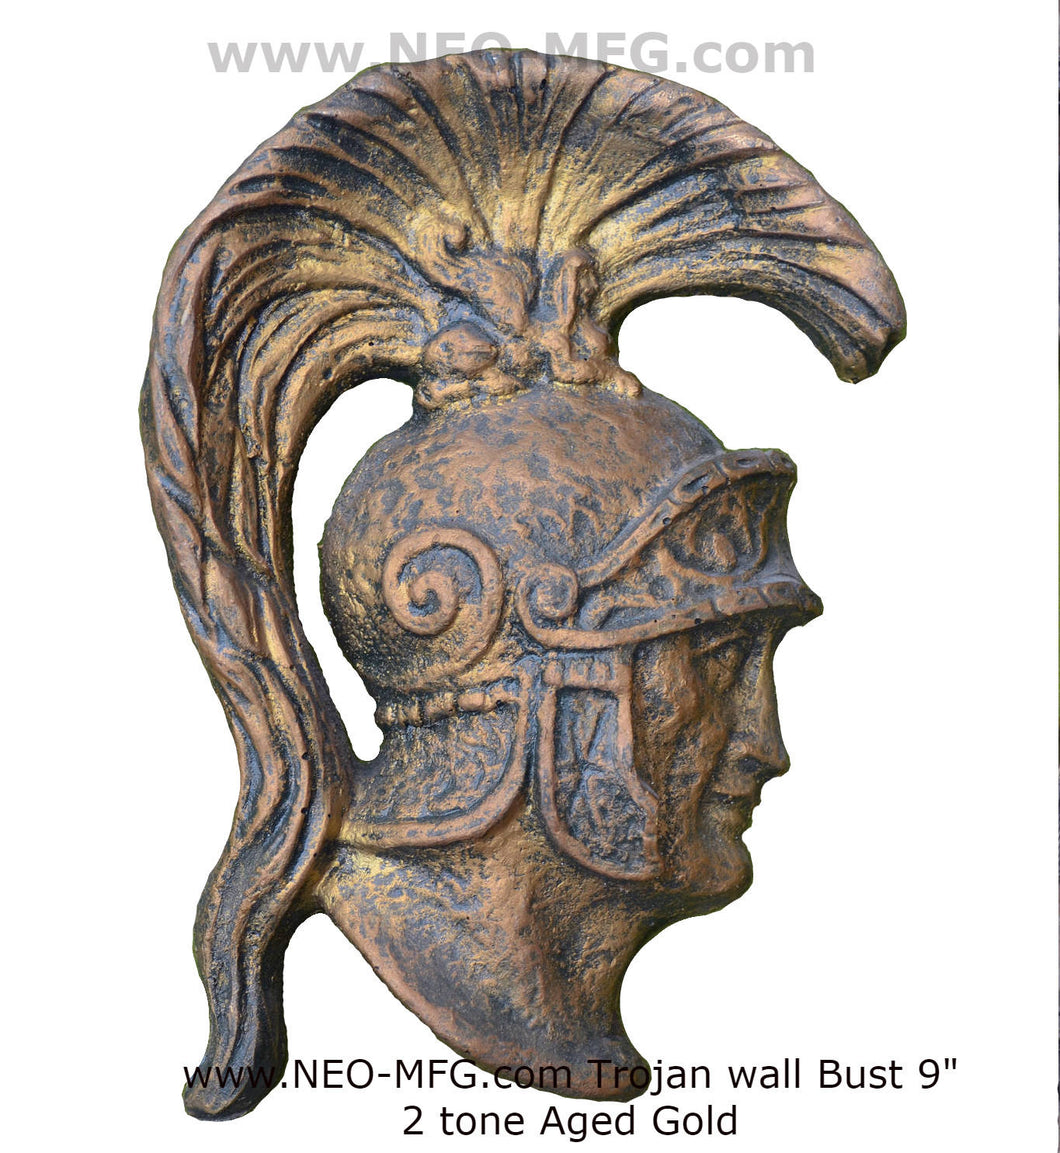 Roman Greek Trojan Bust Sculptural wall relief plaque home decor 6" www.Neo-Mfg.com